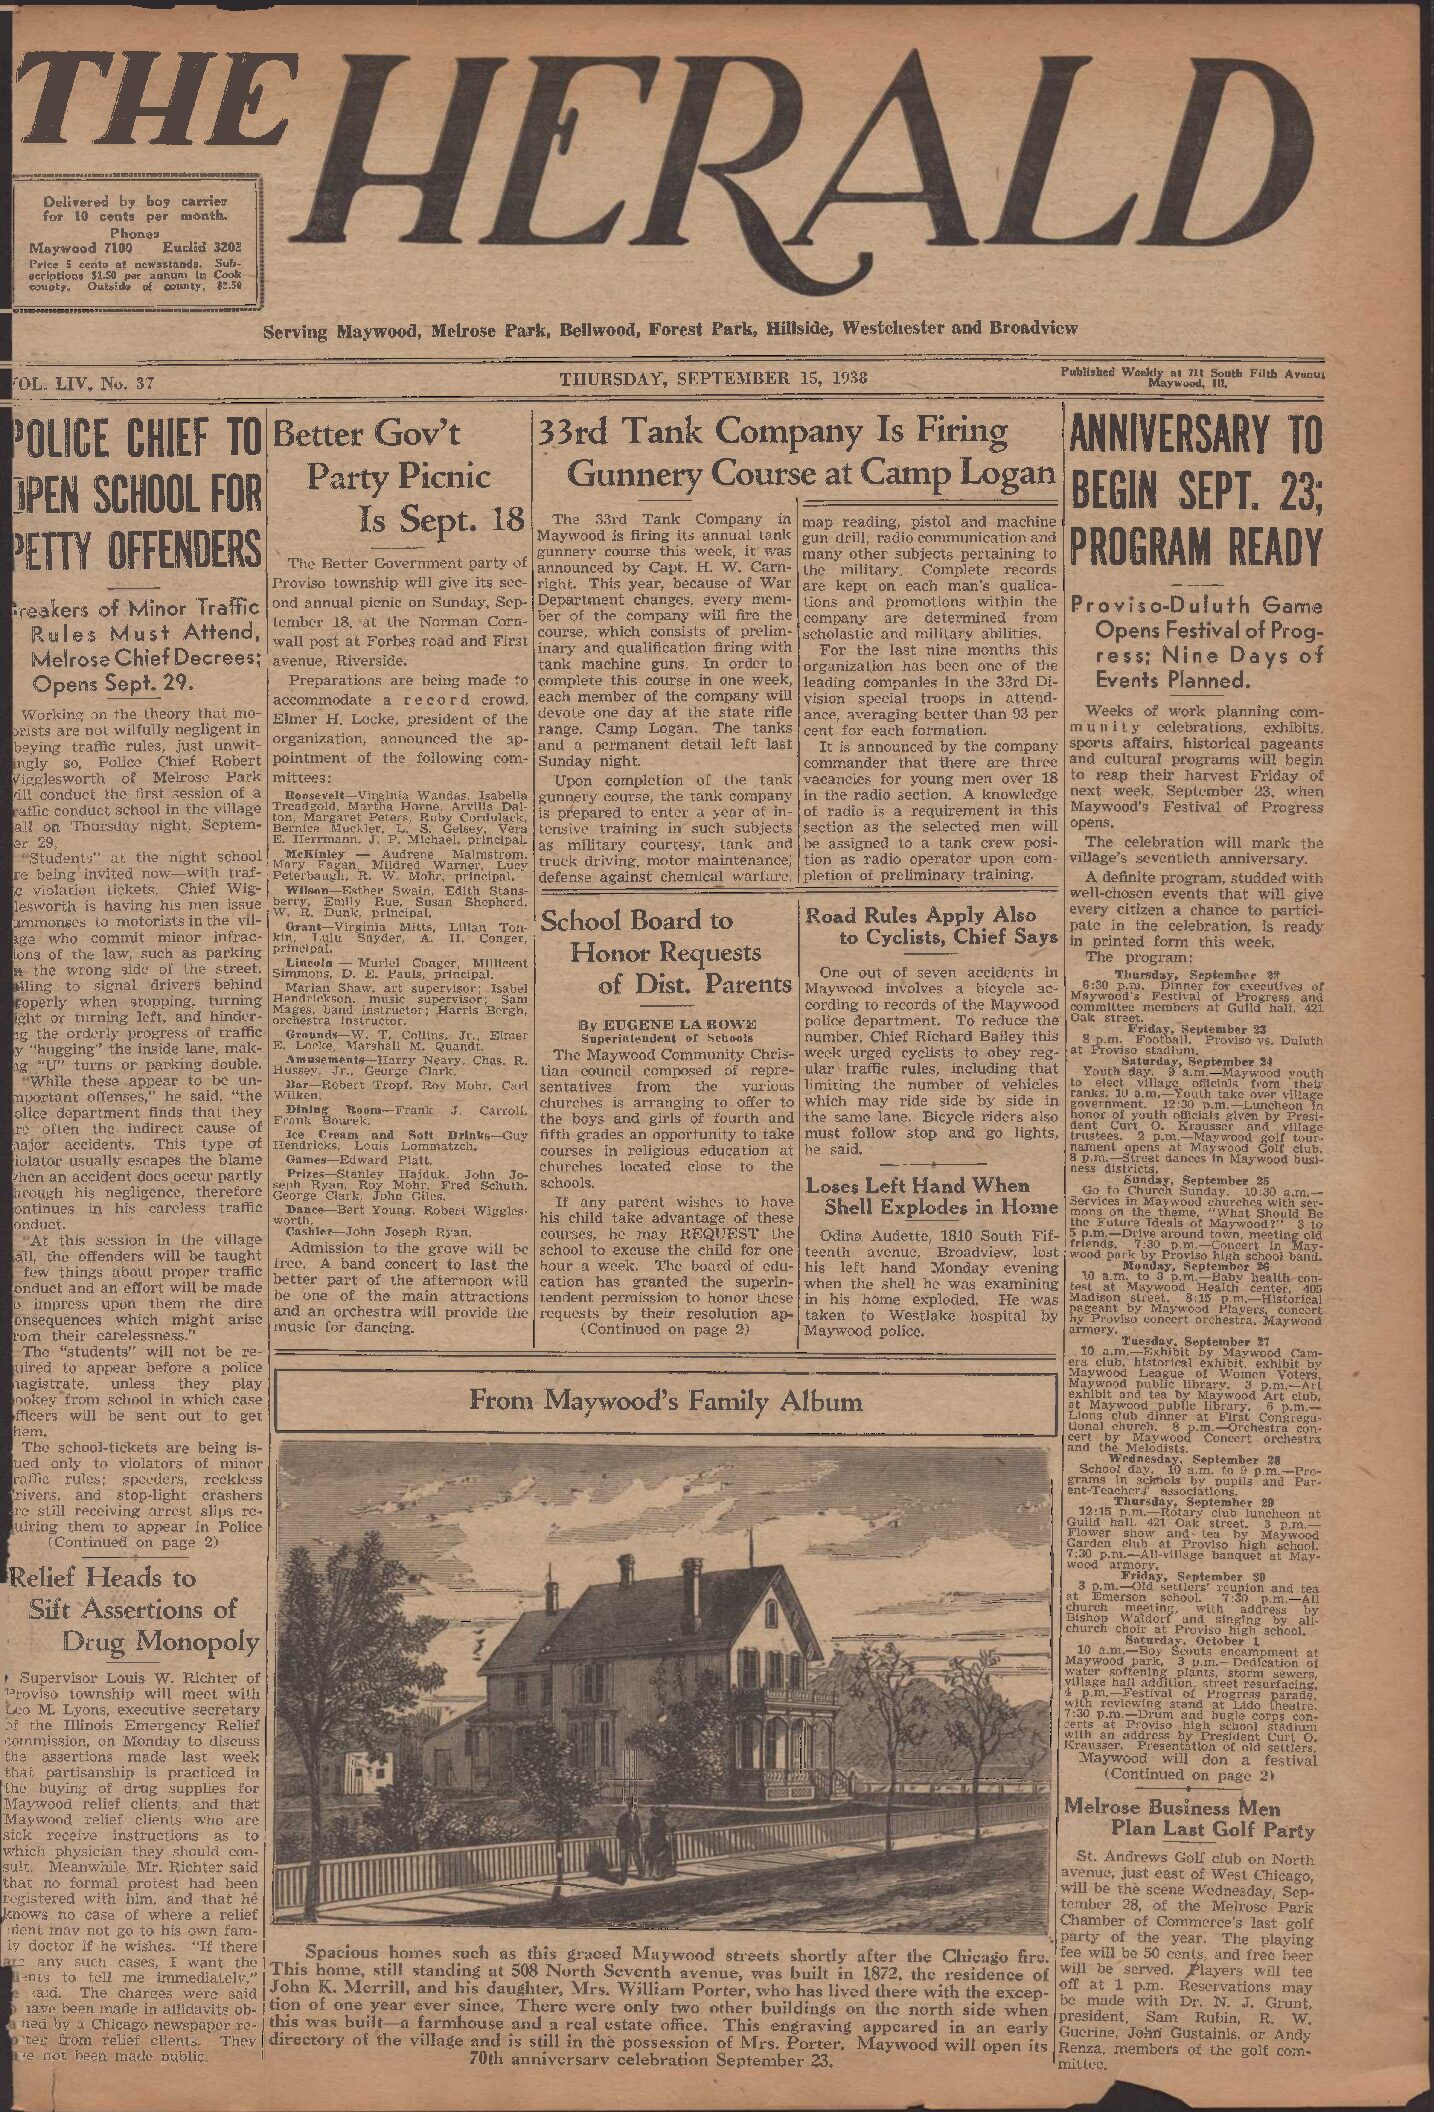 The Herald – 19380915